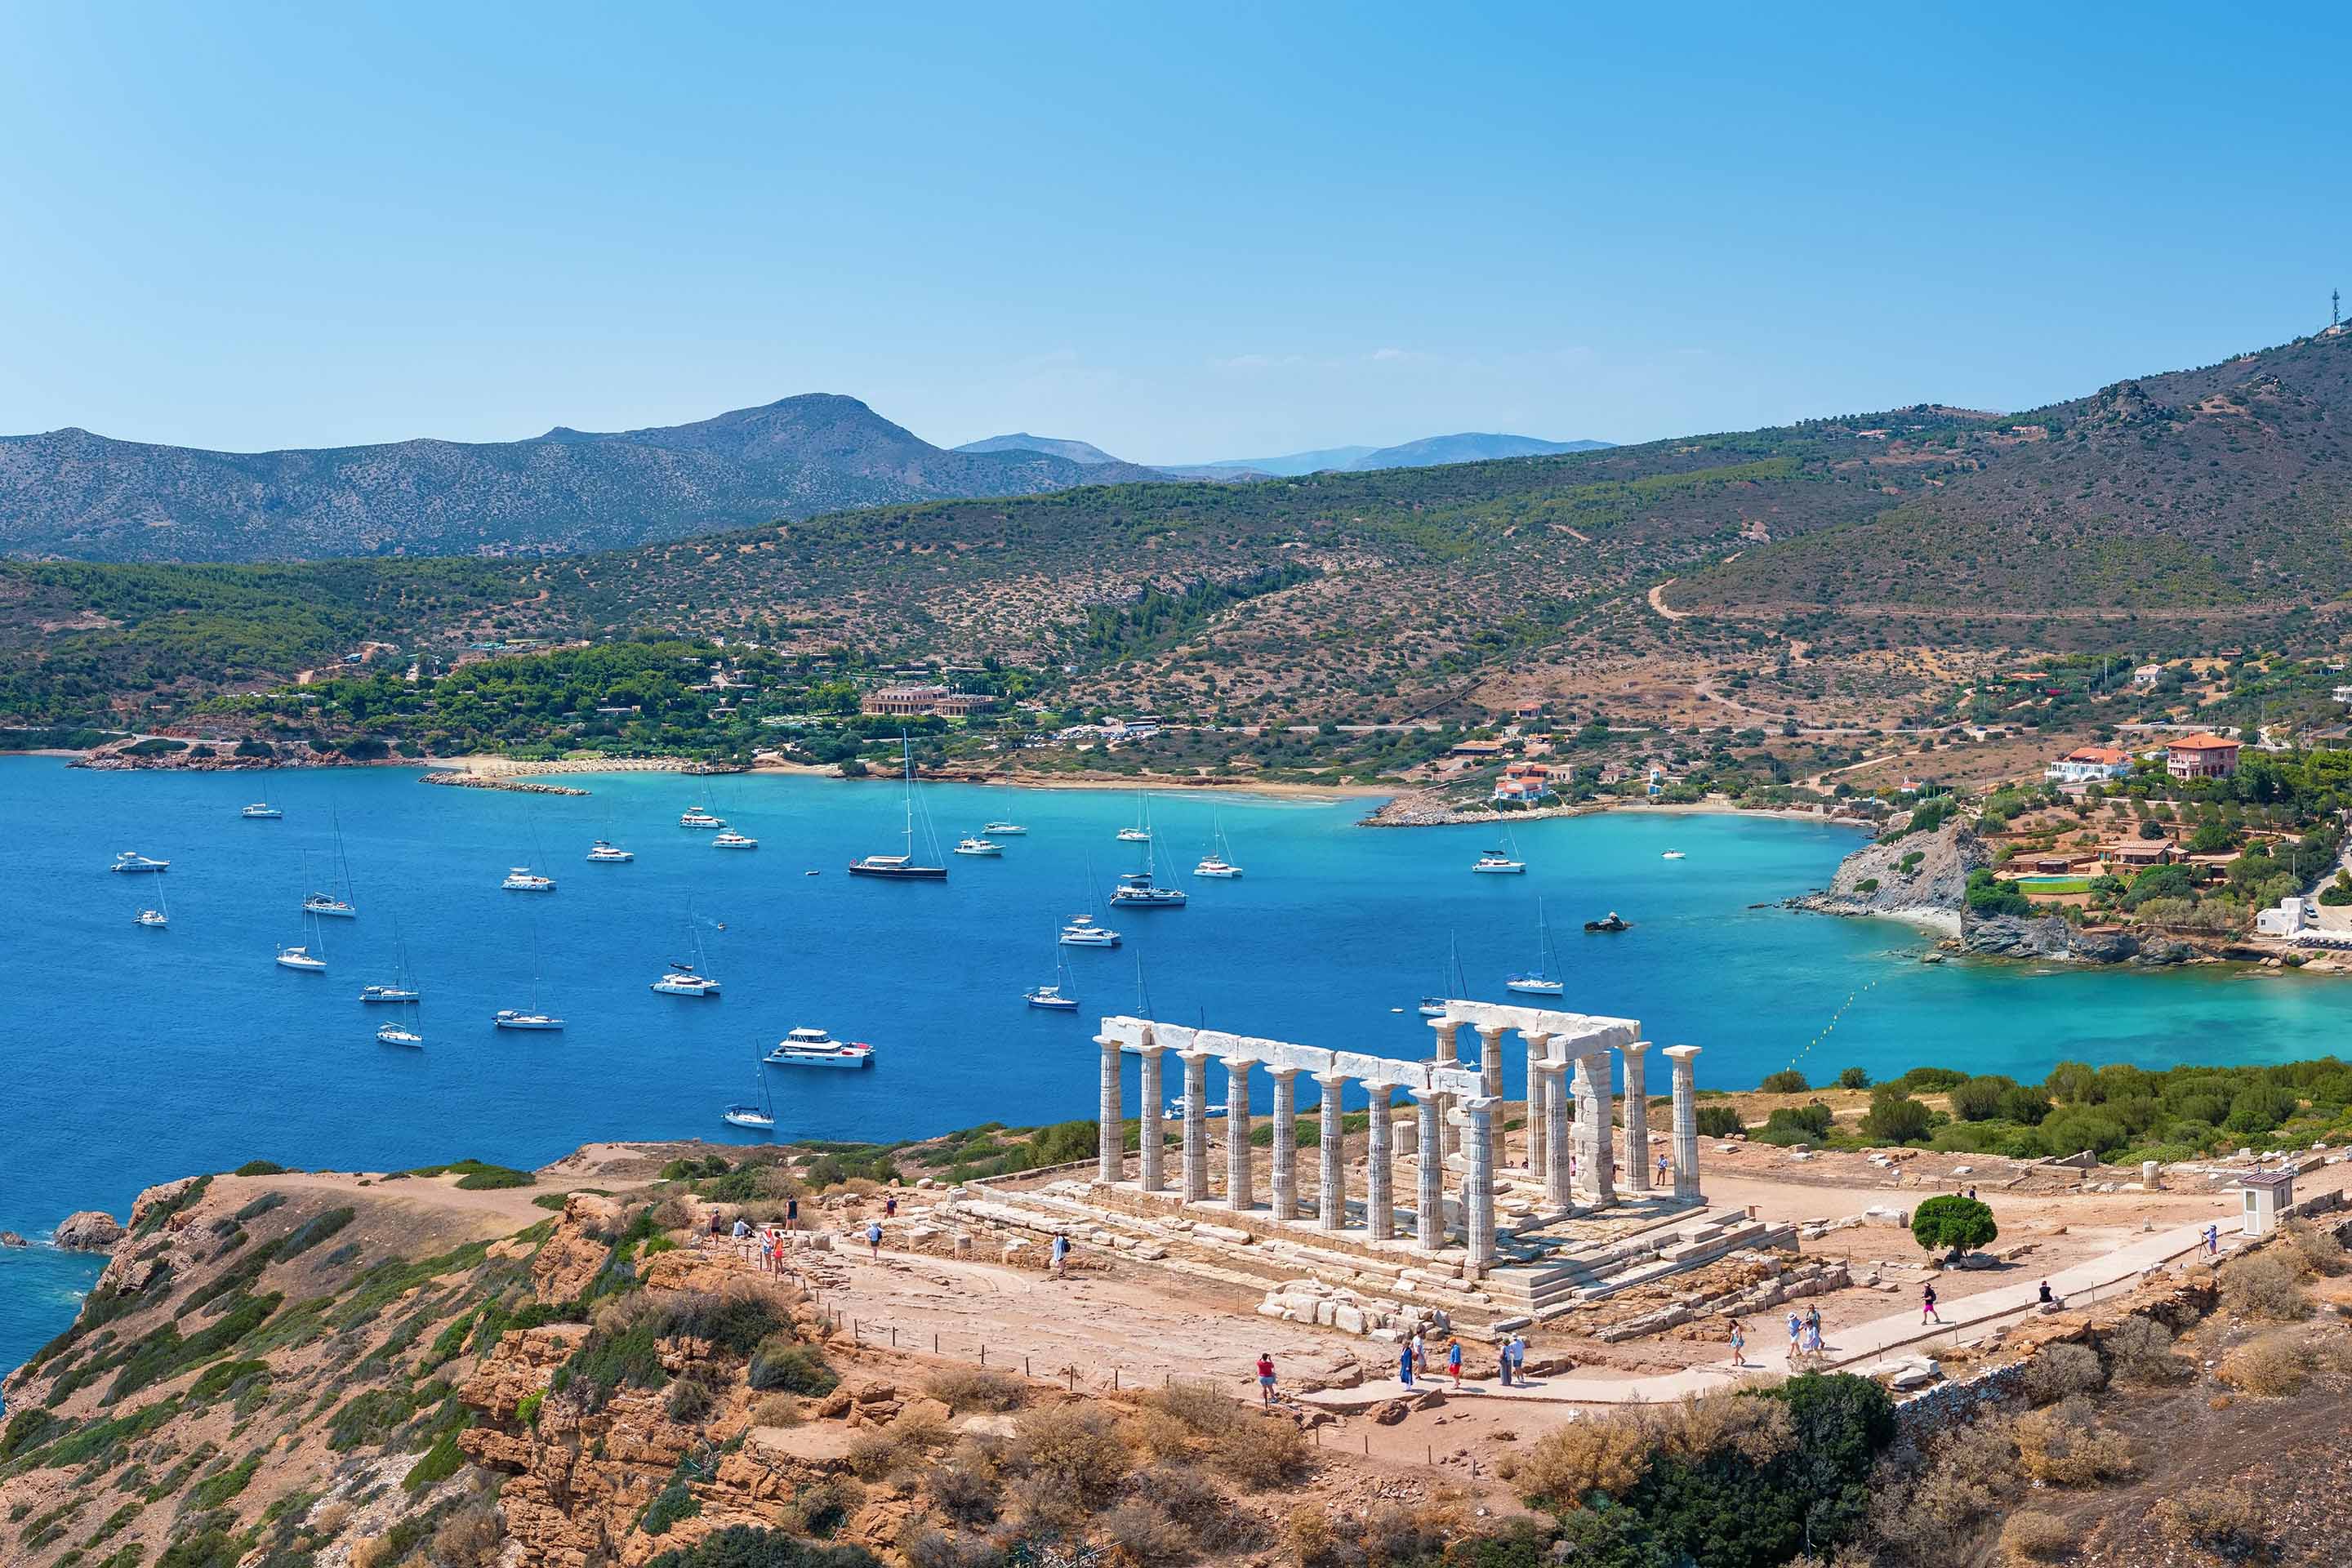 An image showing the Greek coastline